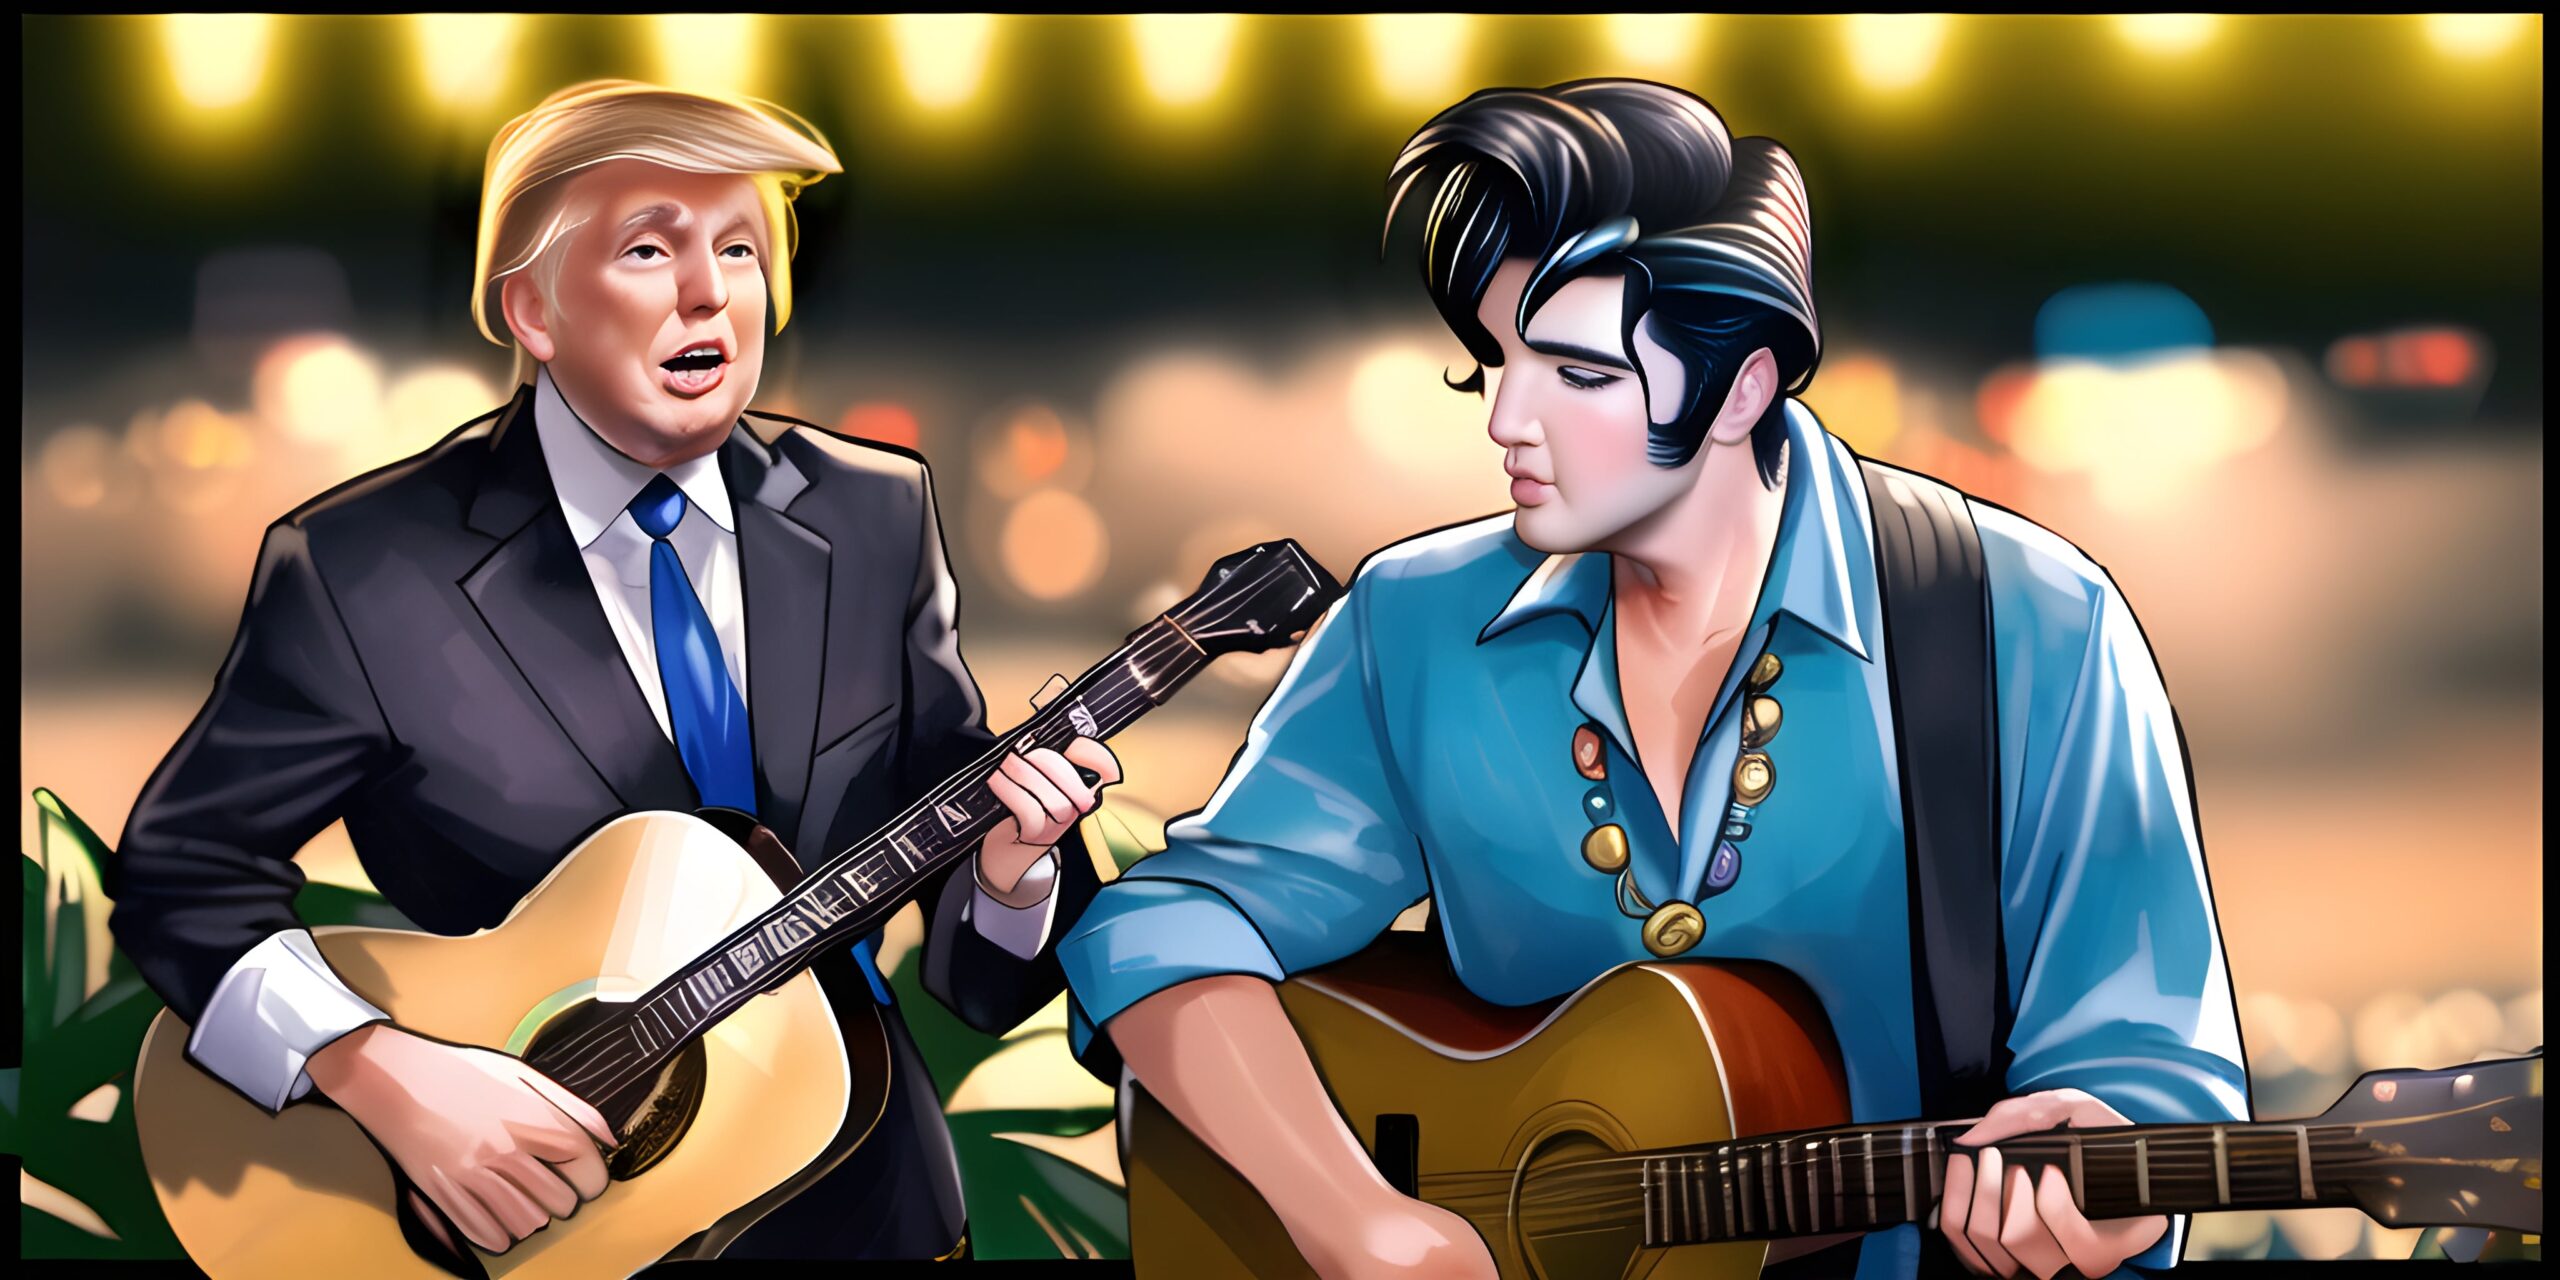 Donald Trump and Elvis Presley Jam Session